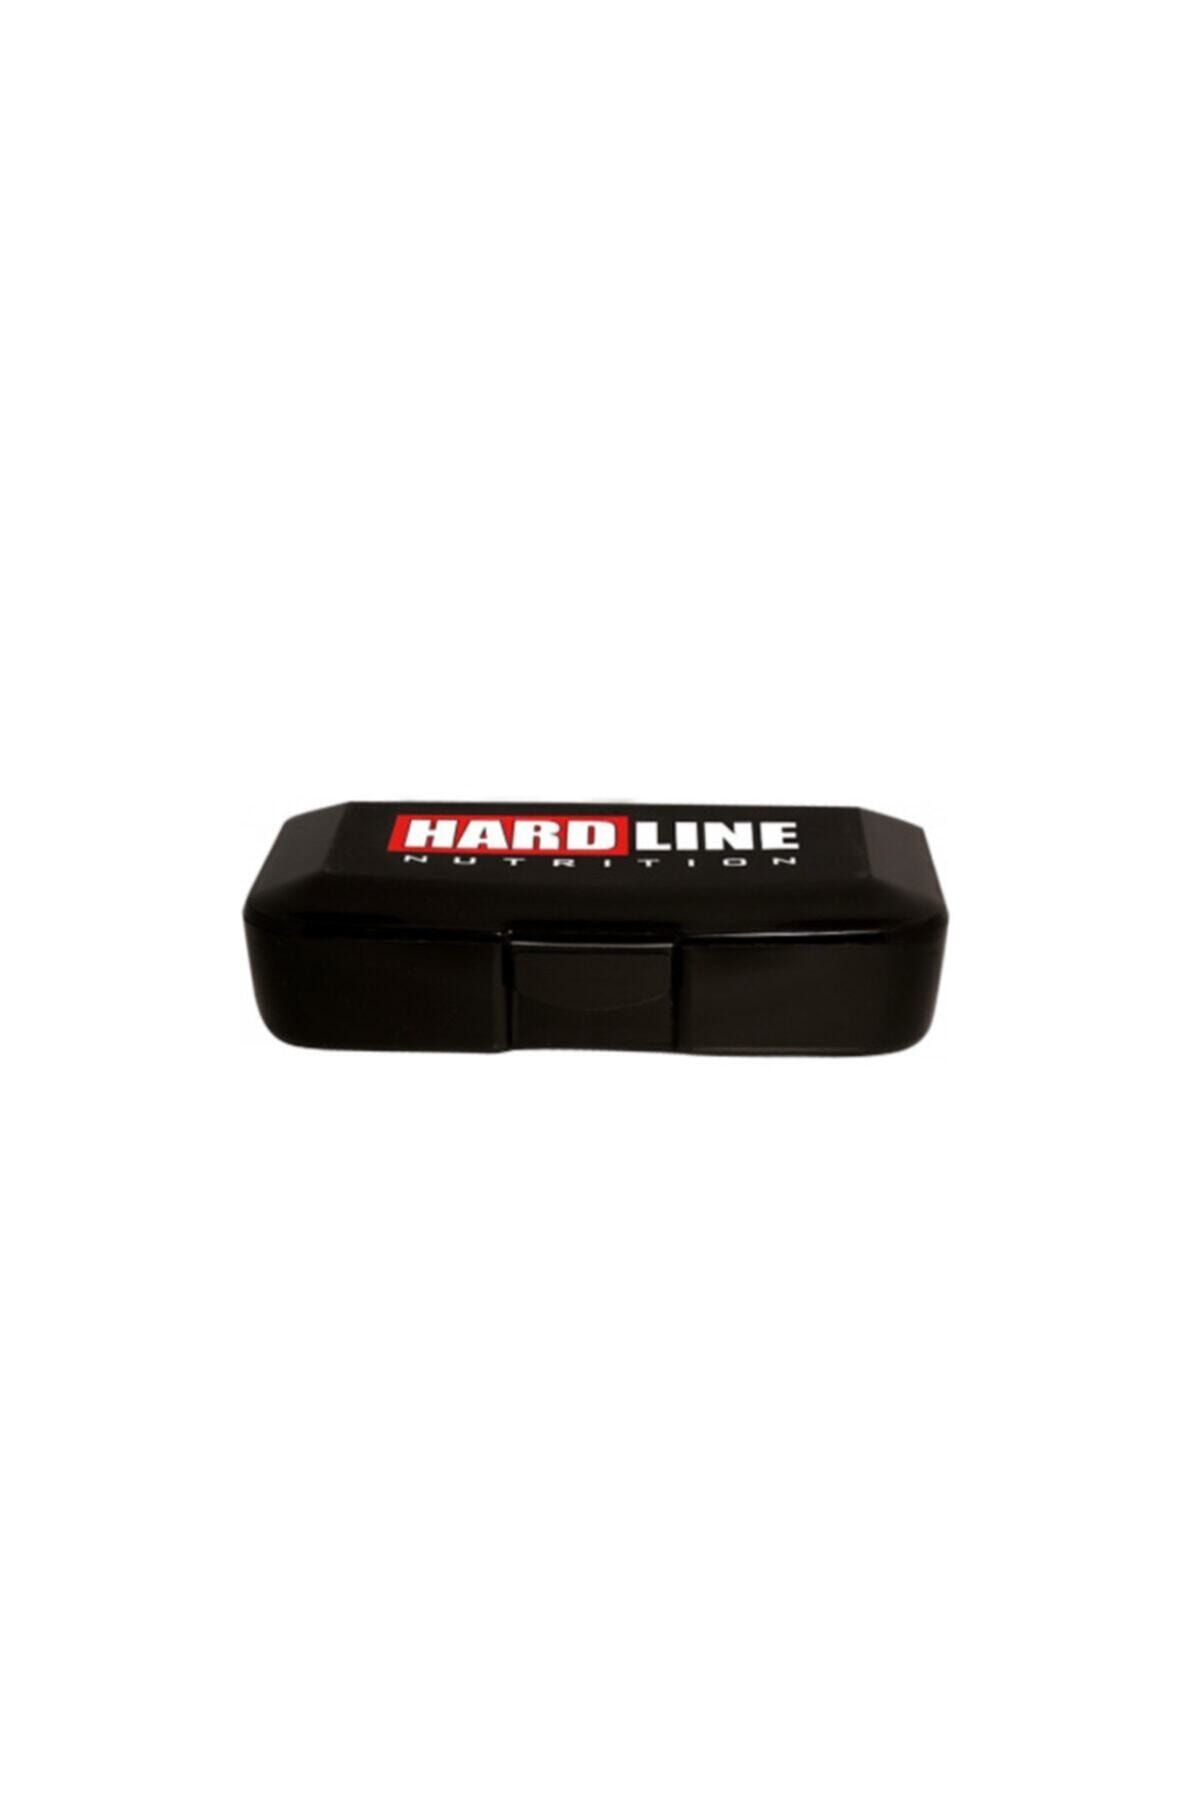 Hardline Hardline Pill Box